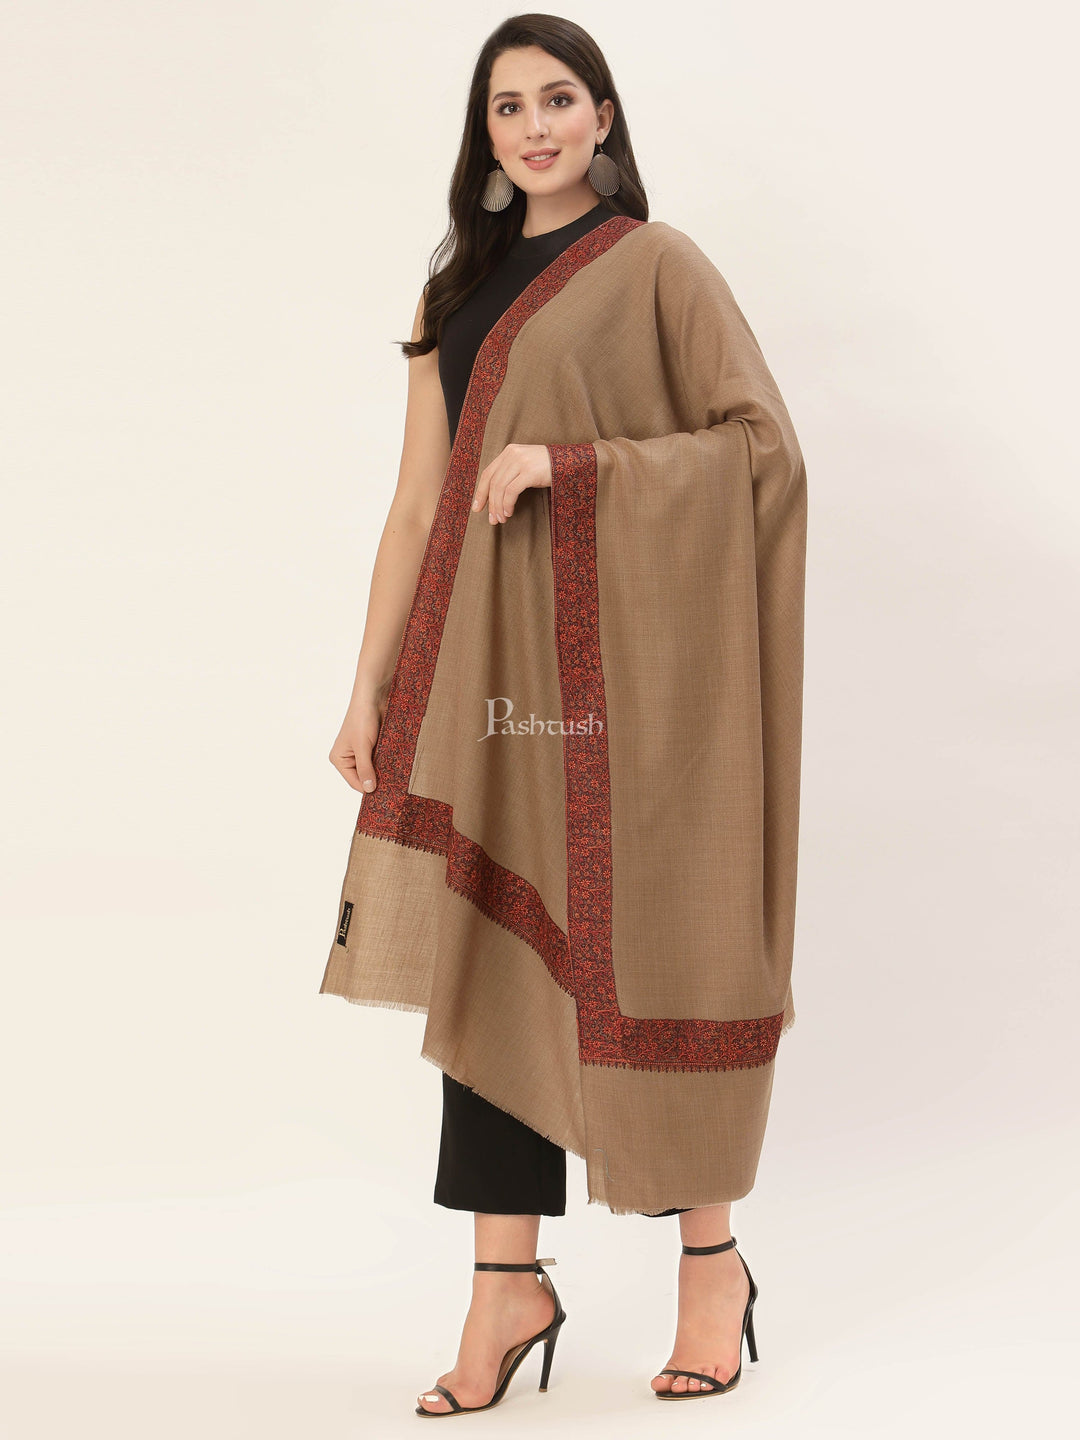 Pashtush India Womens Shawls Pashtush Womens Embroidery Shawl, Challa Daur Border, Fine Wool